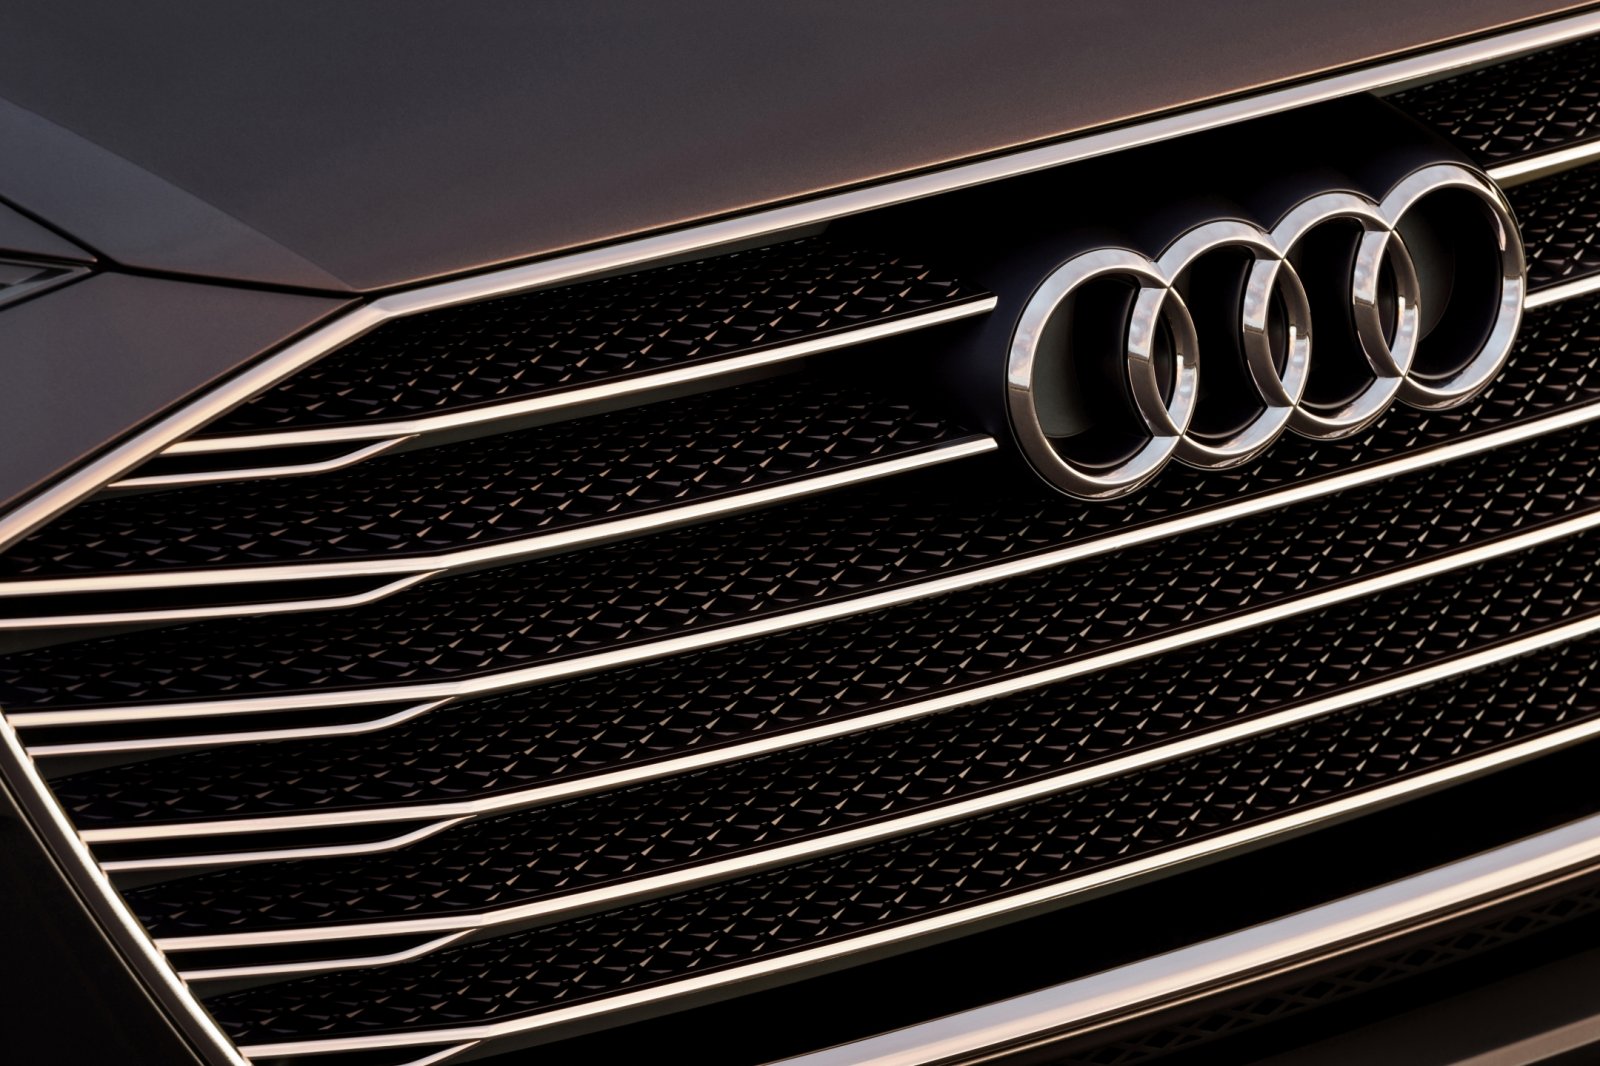 Verse lading foto's van Audi Prologue Concept